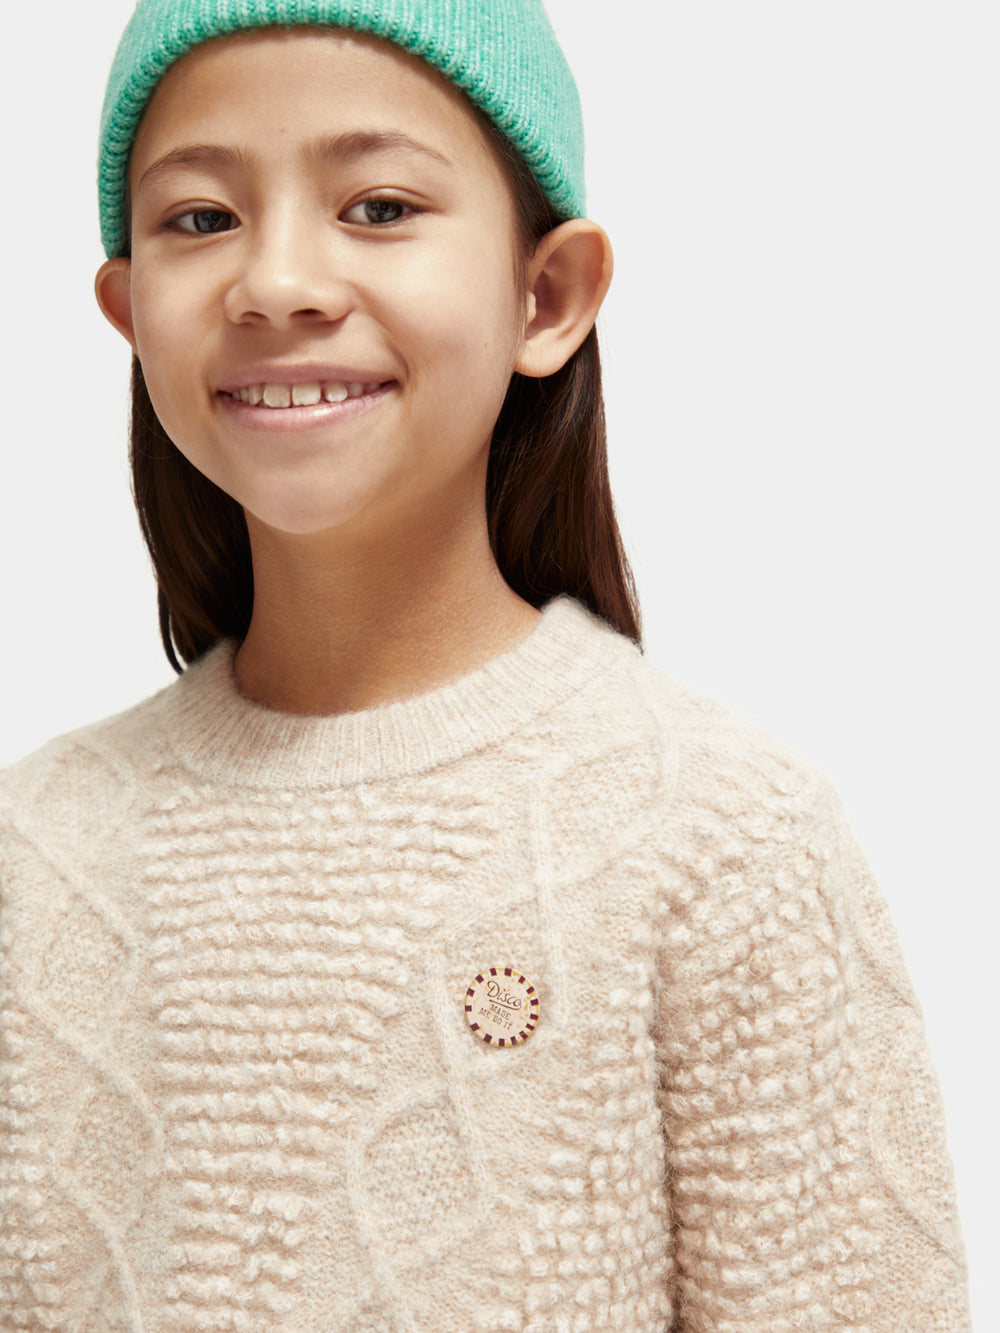 Kids - Cable knit pullover - Scotch & Soda AU